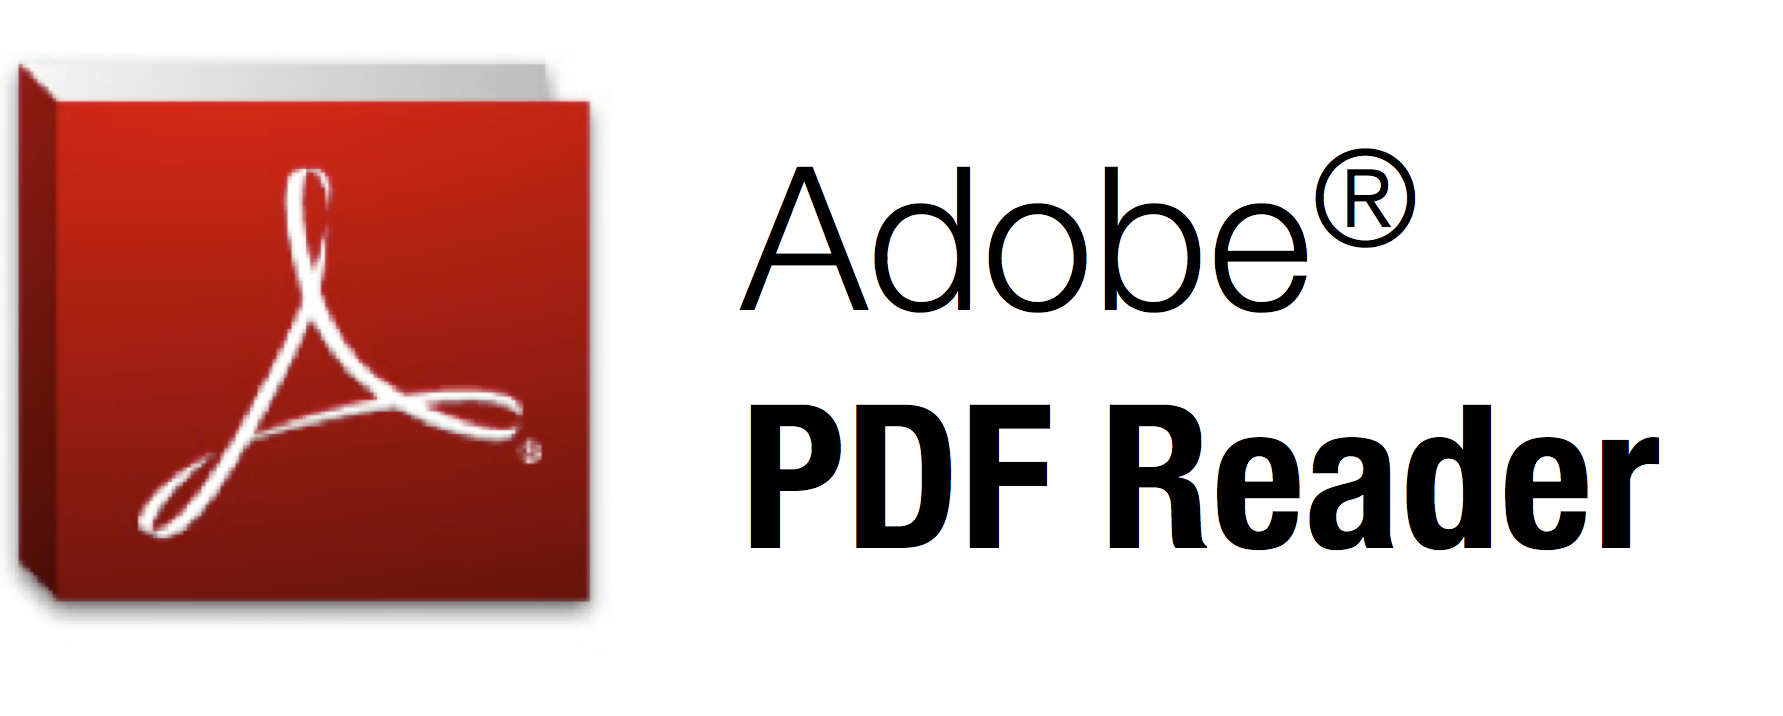 9 Get Adobe Reader Icon Images - Adobe PDF Reader Icon ...